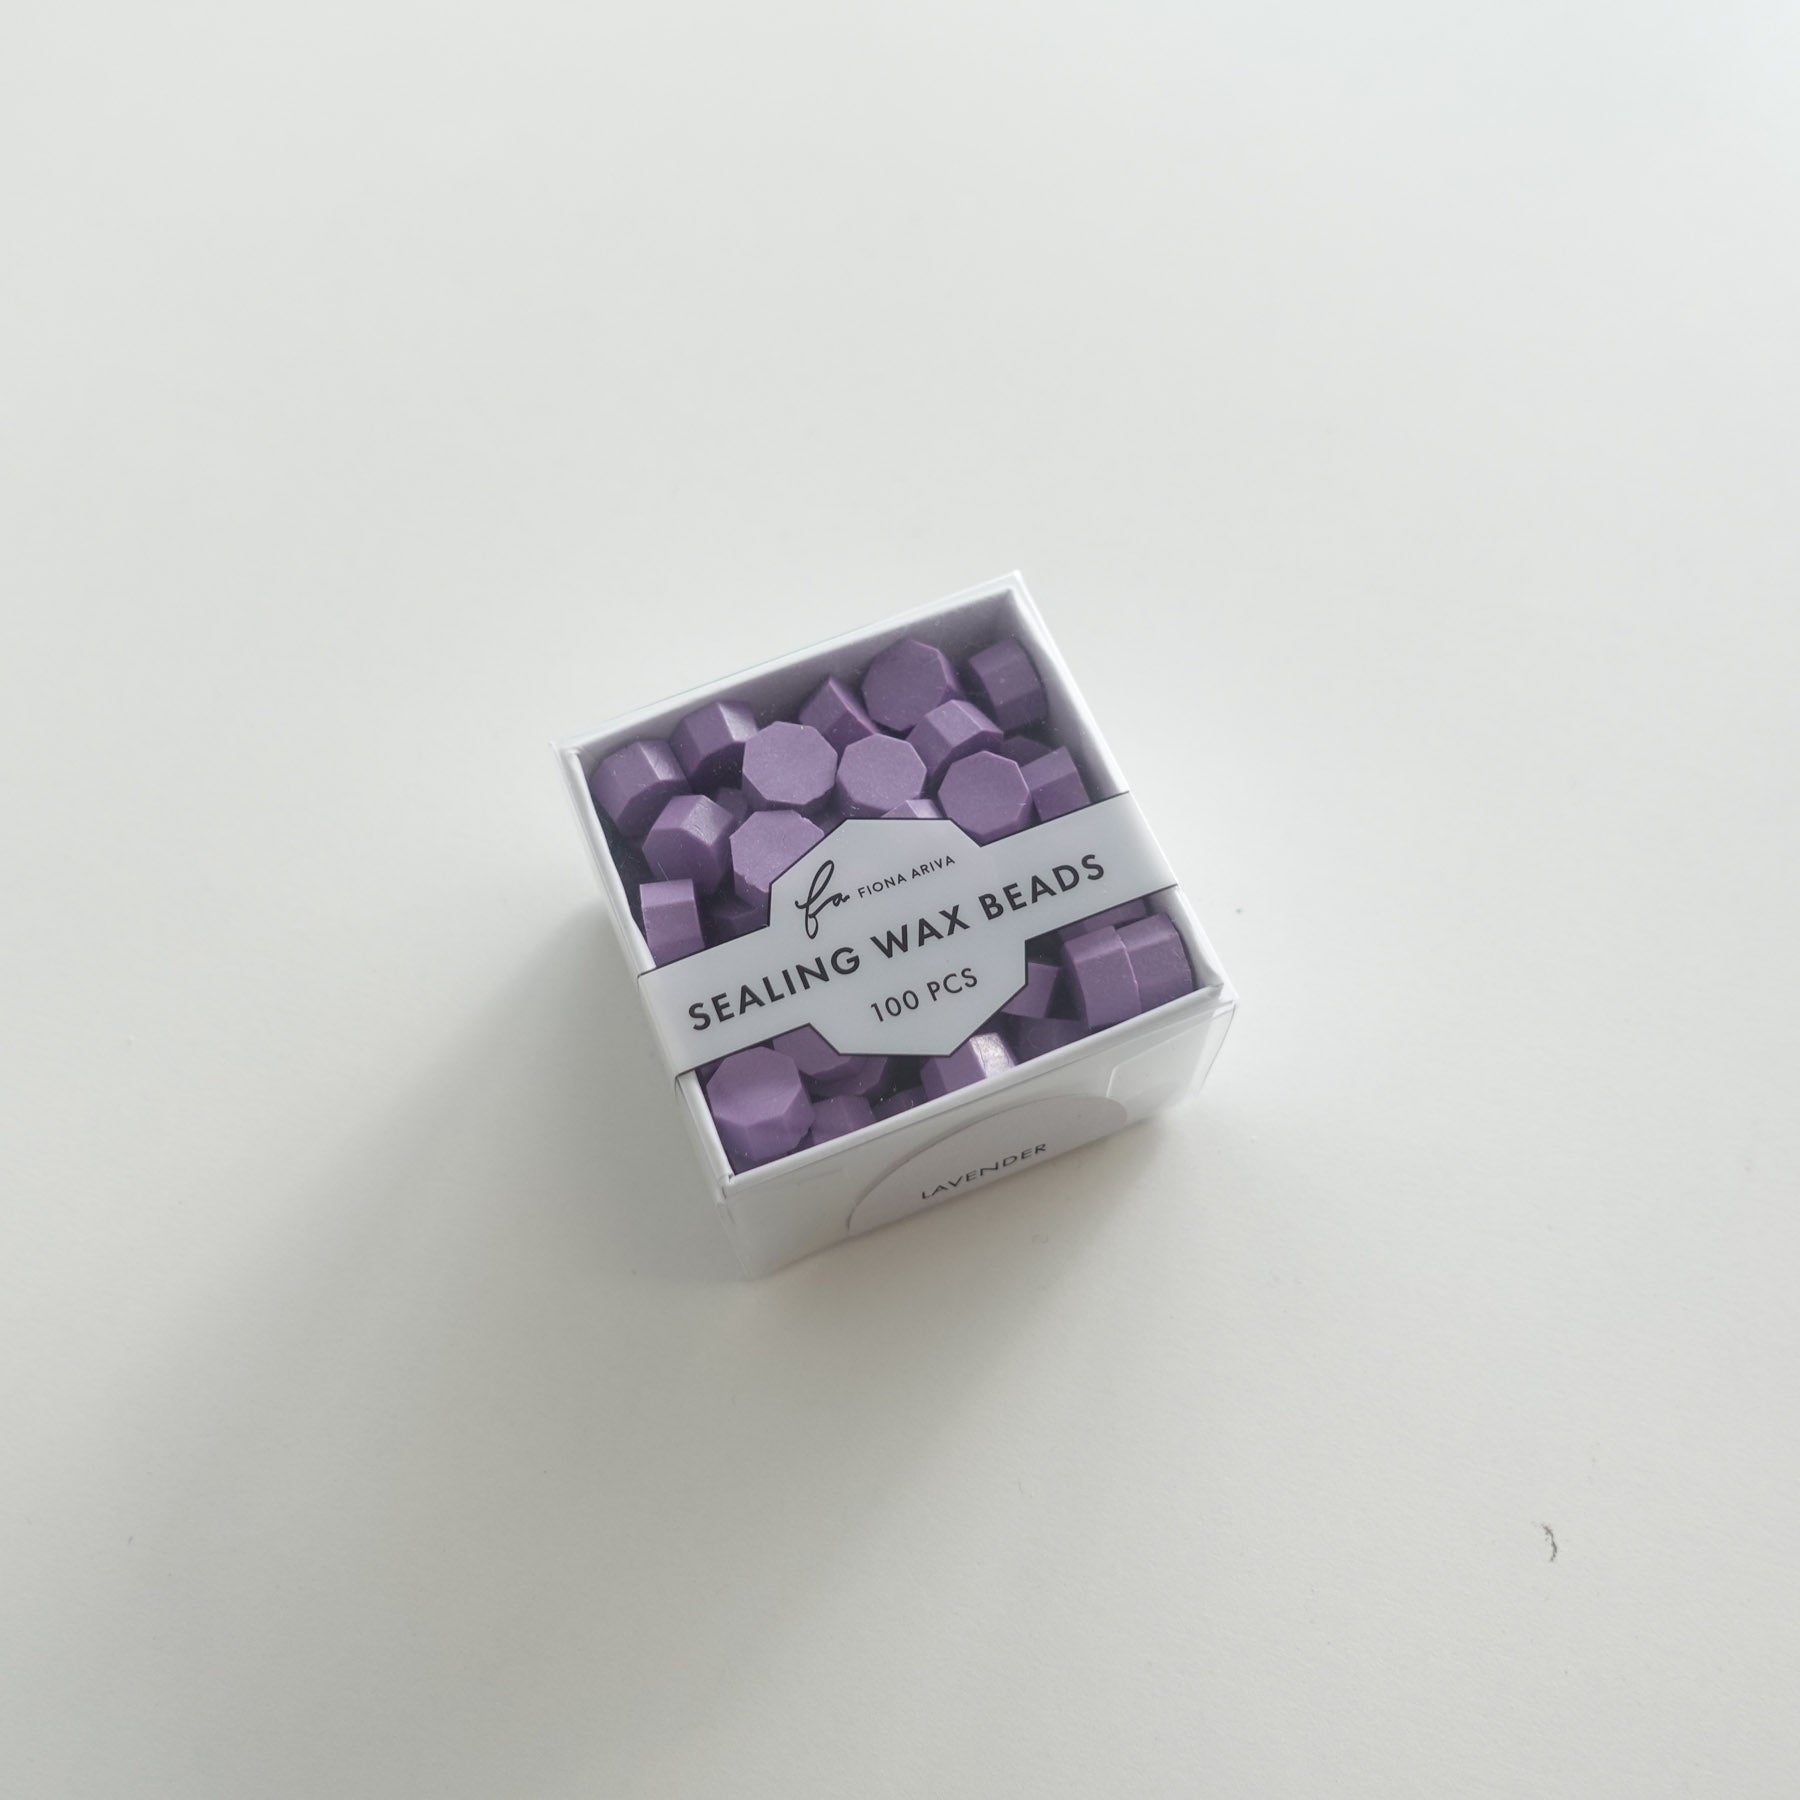 fiona ariva australia sealing wax seal beads lavender purple